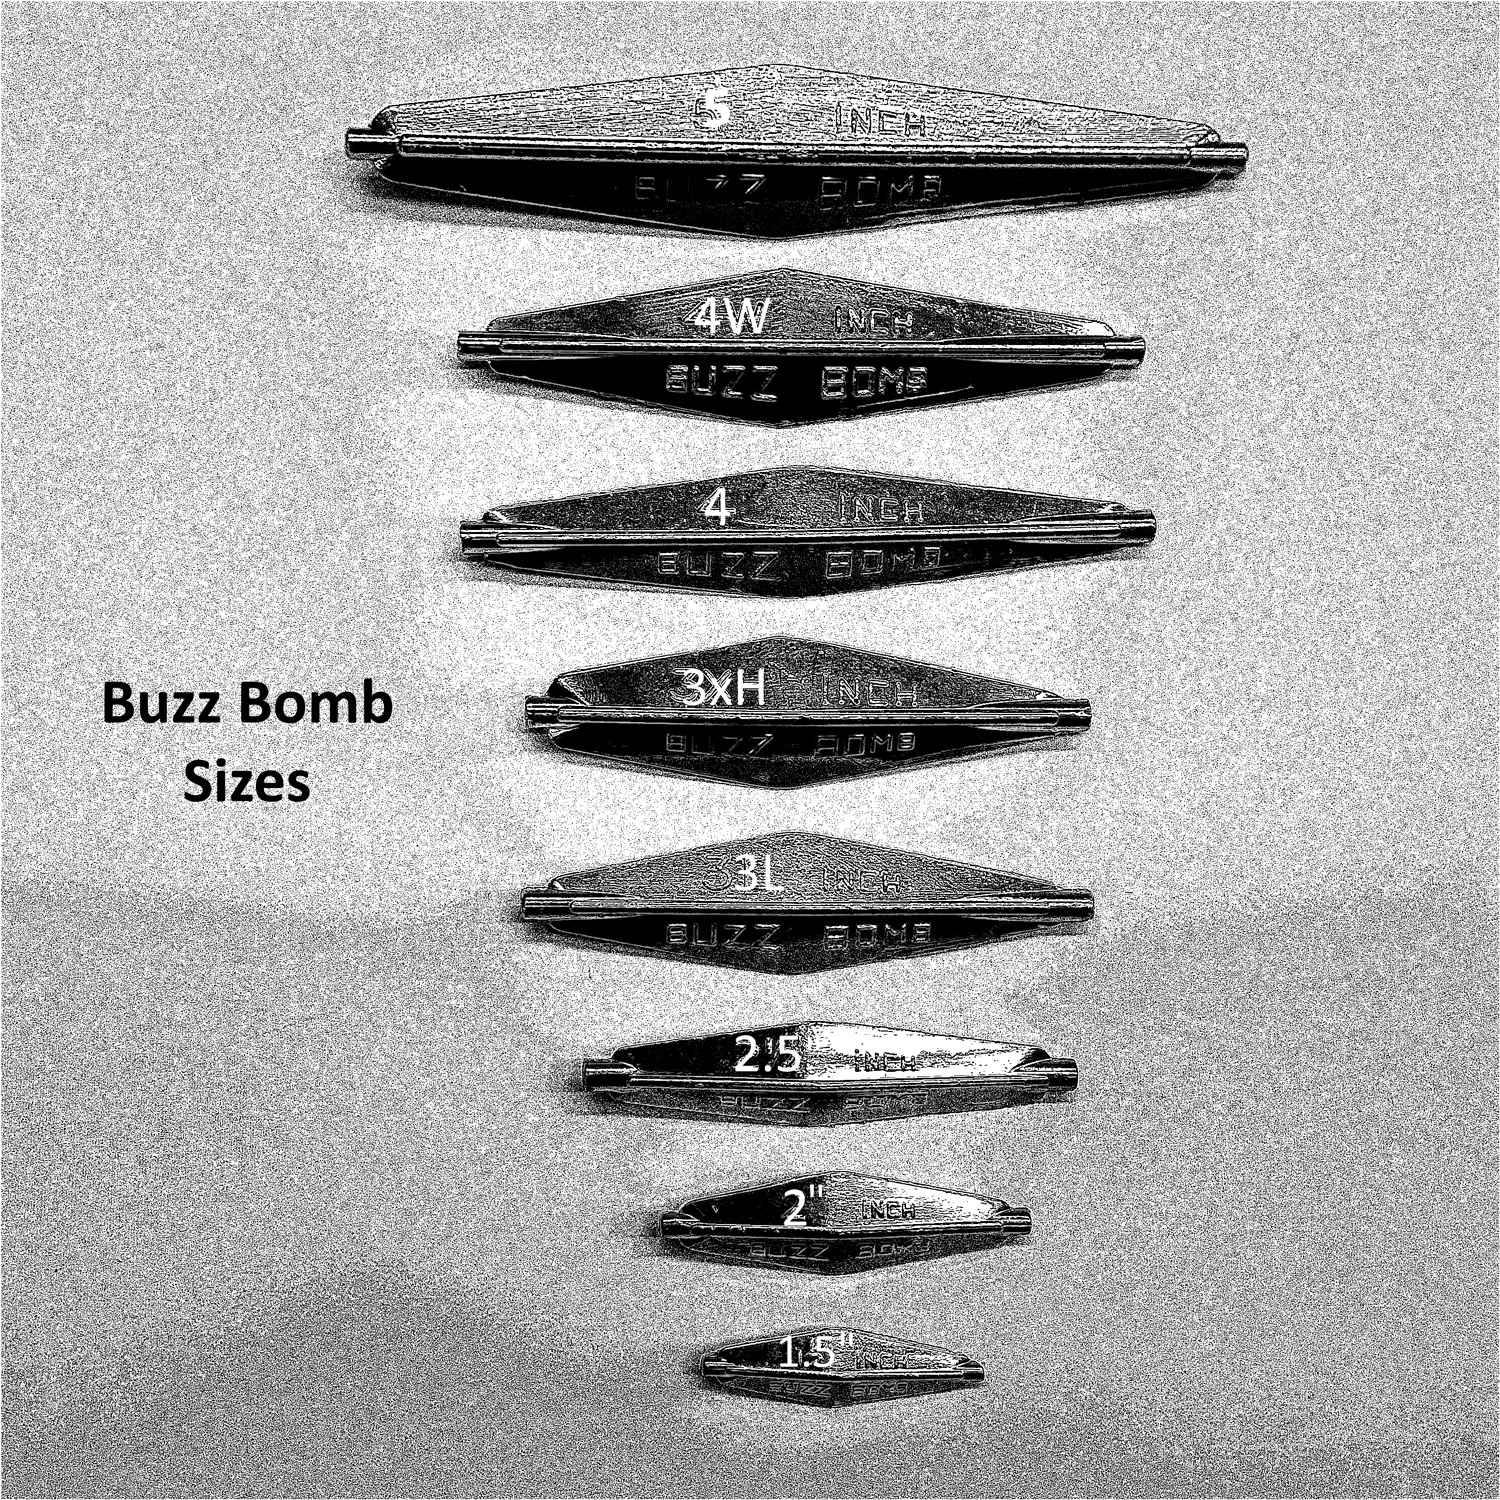 Buzz Bomb Perch